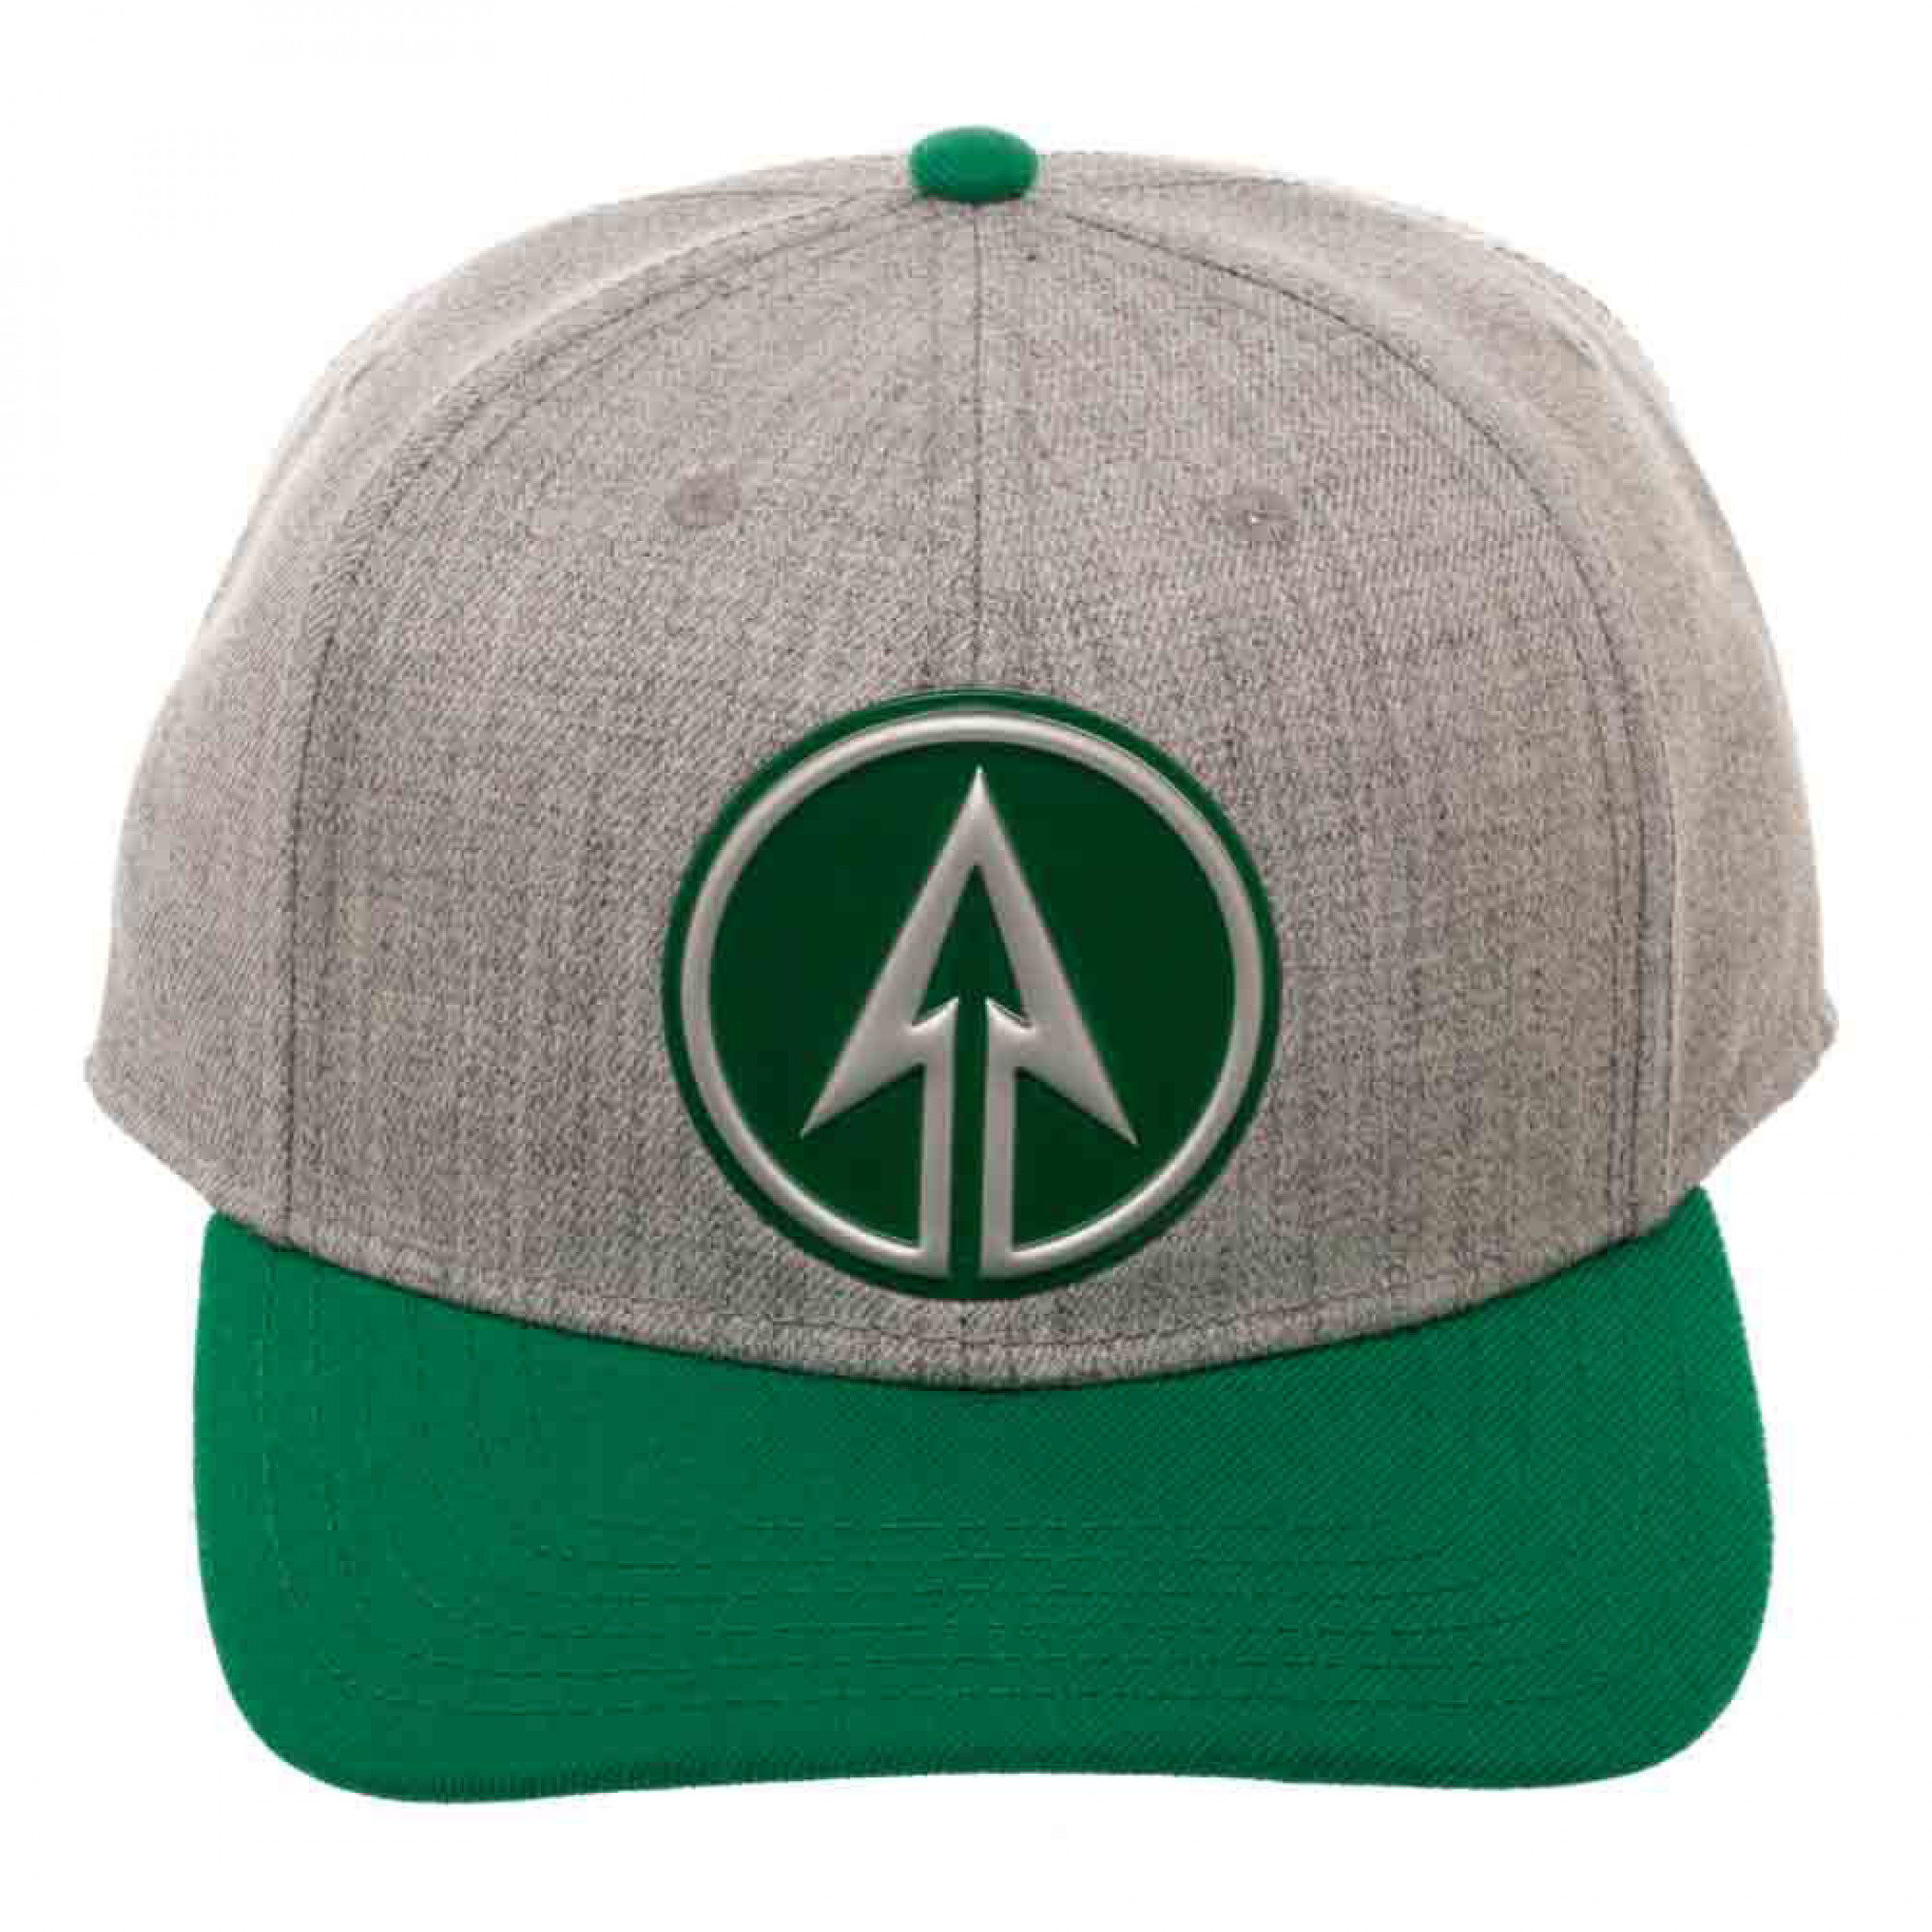 DC Comics Green Arrow Chrome Weld Pre-Curved Bill Snapback Hat